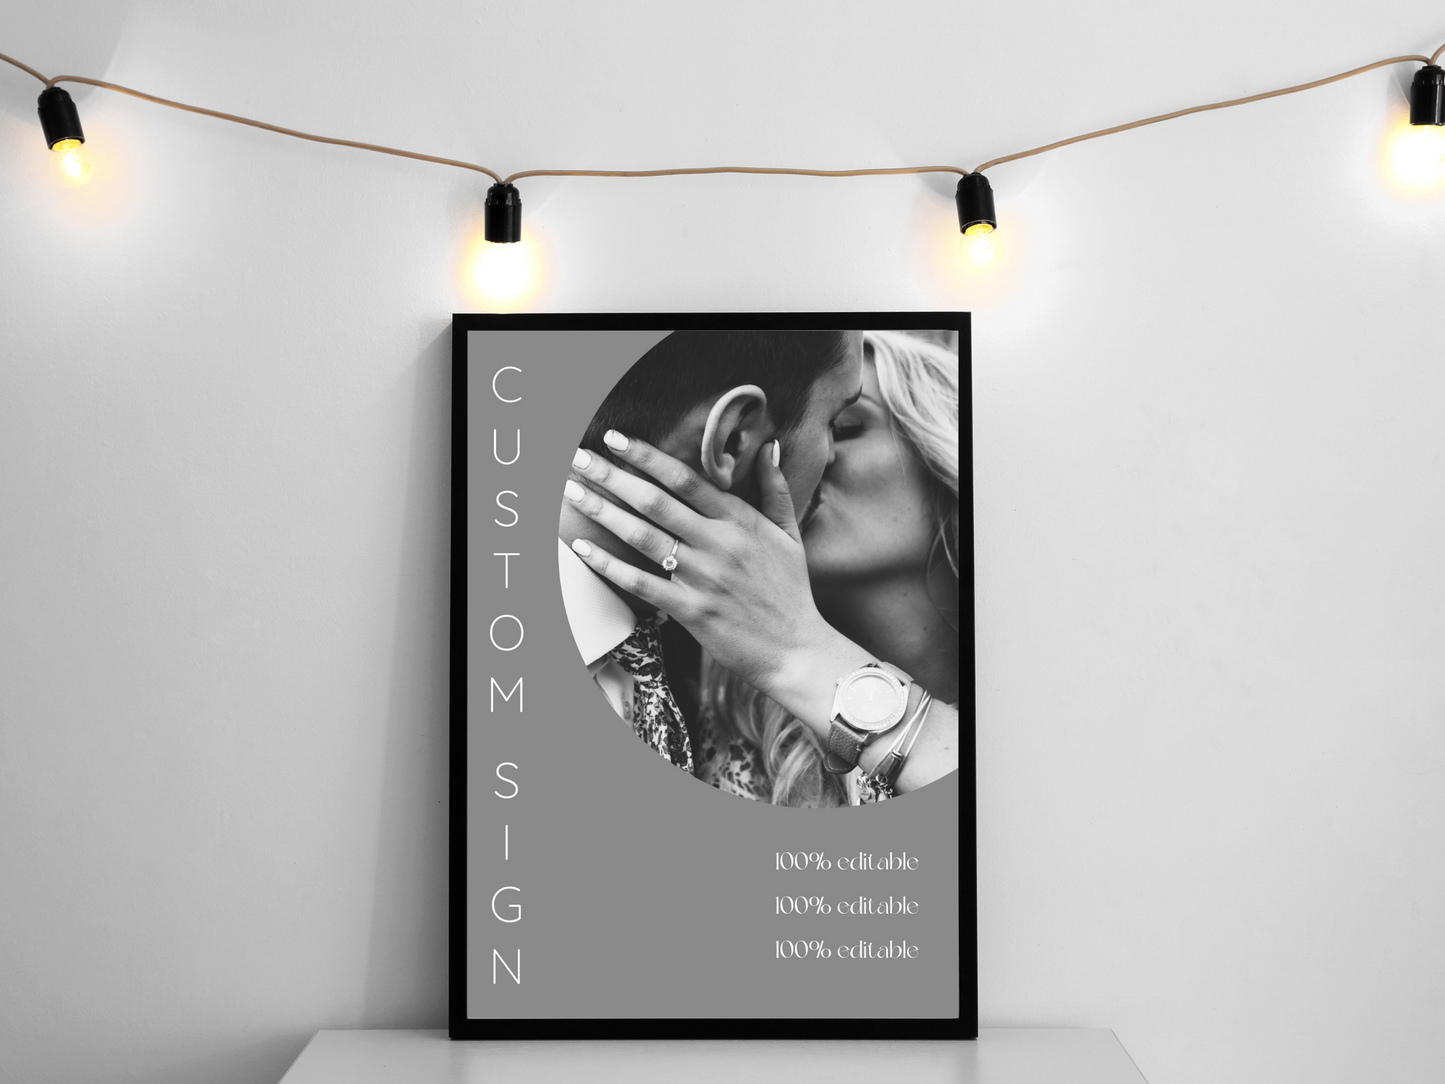 Minimalist Photo Wedding Sign Template Bundle, Printable Templates